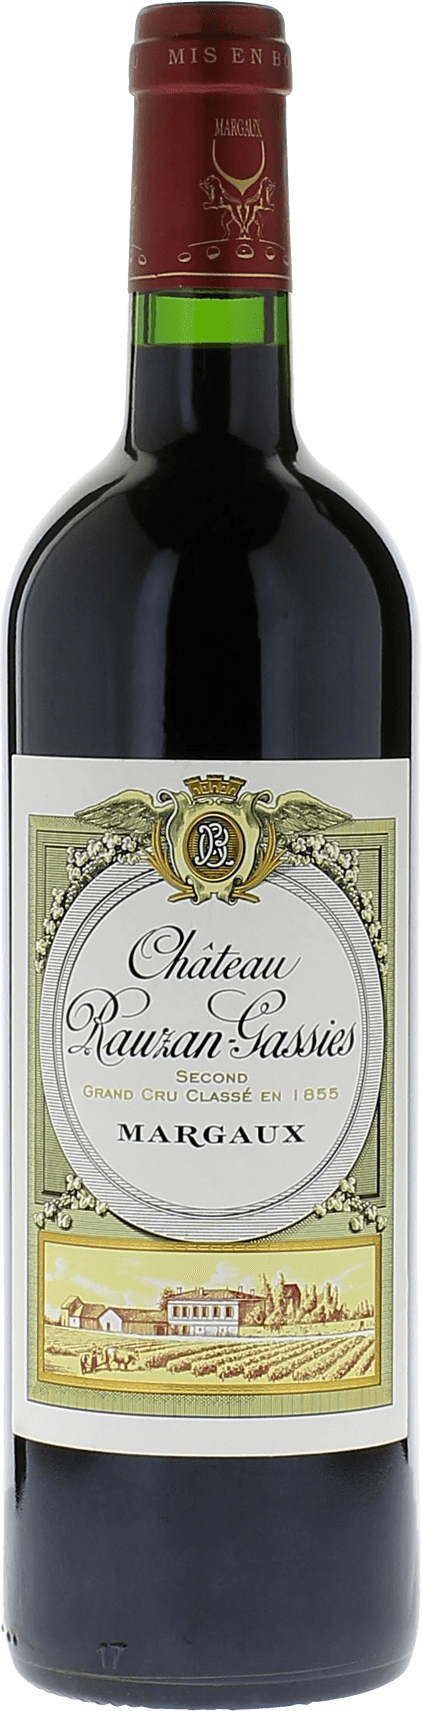 Rauzan-gassies 1981 2me Grand cru class Margaux, Bordeaux rouge